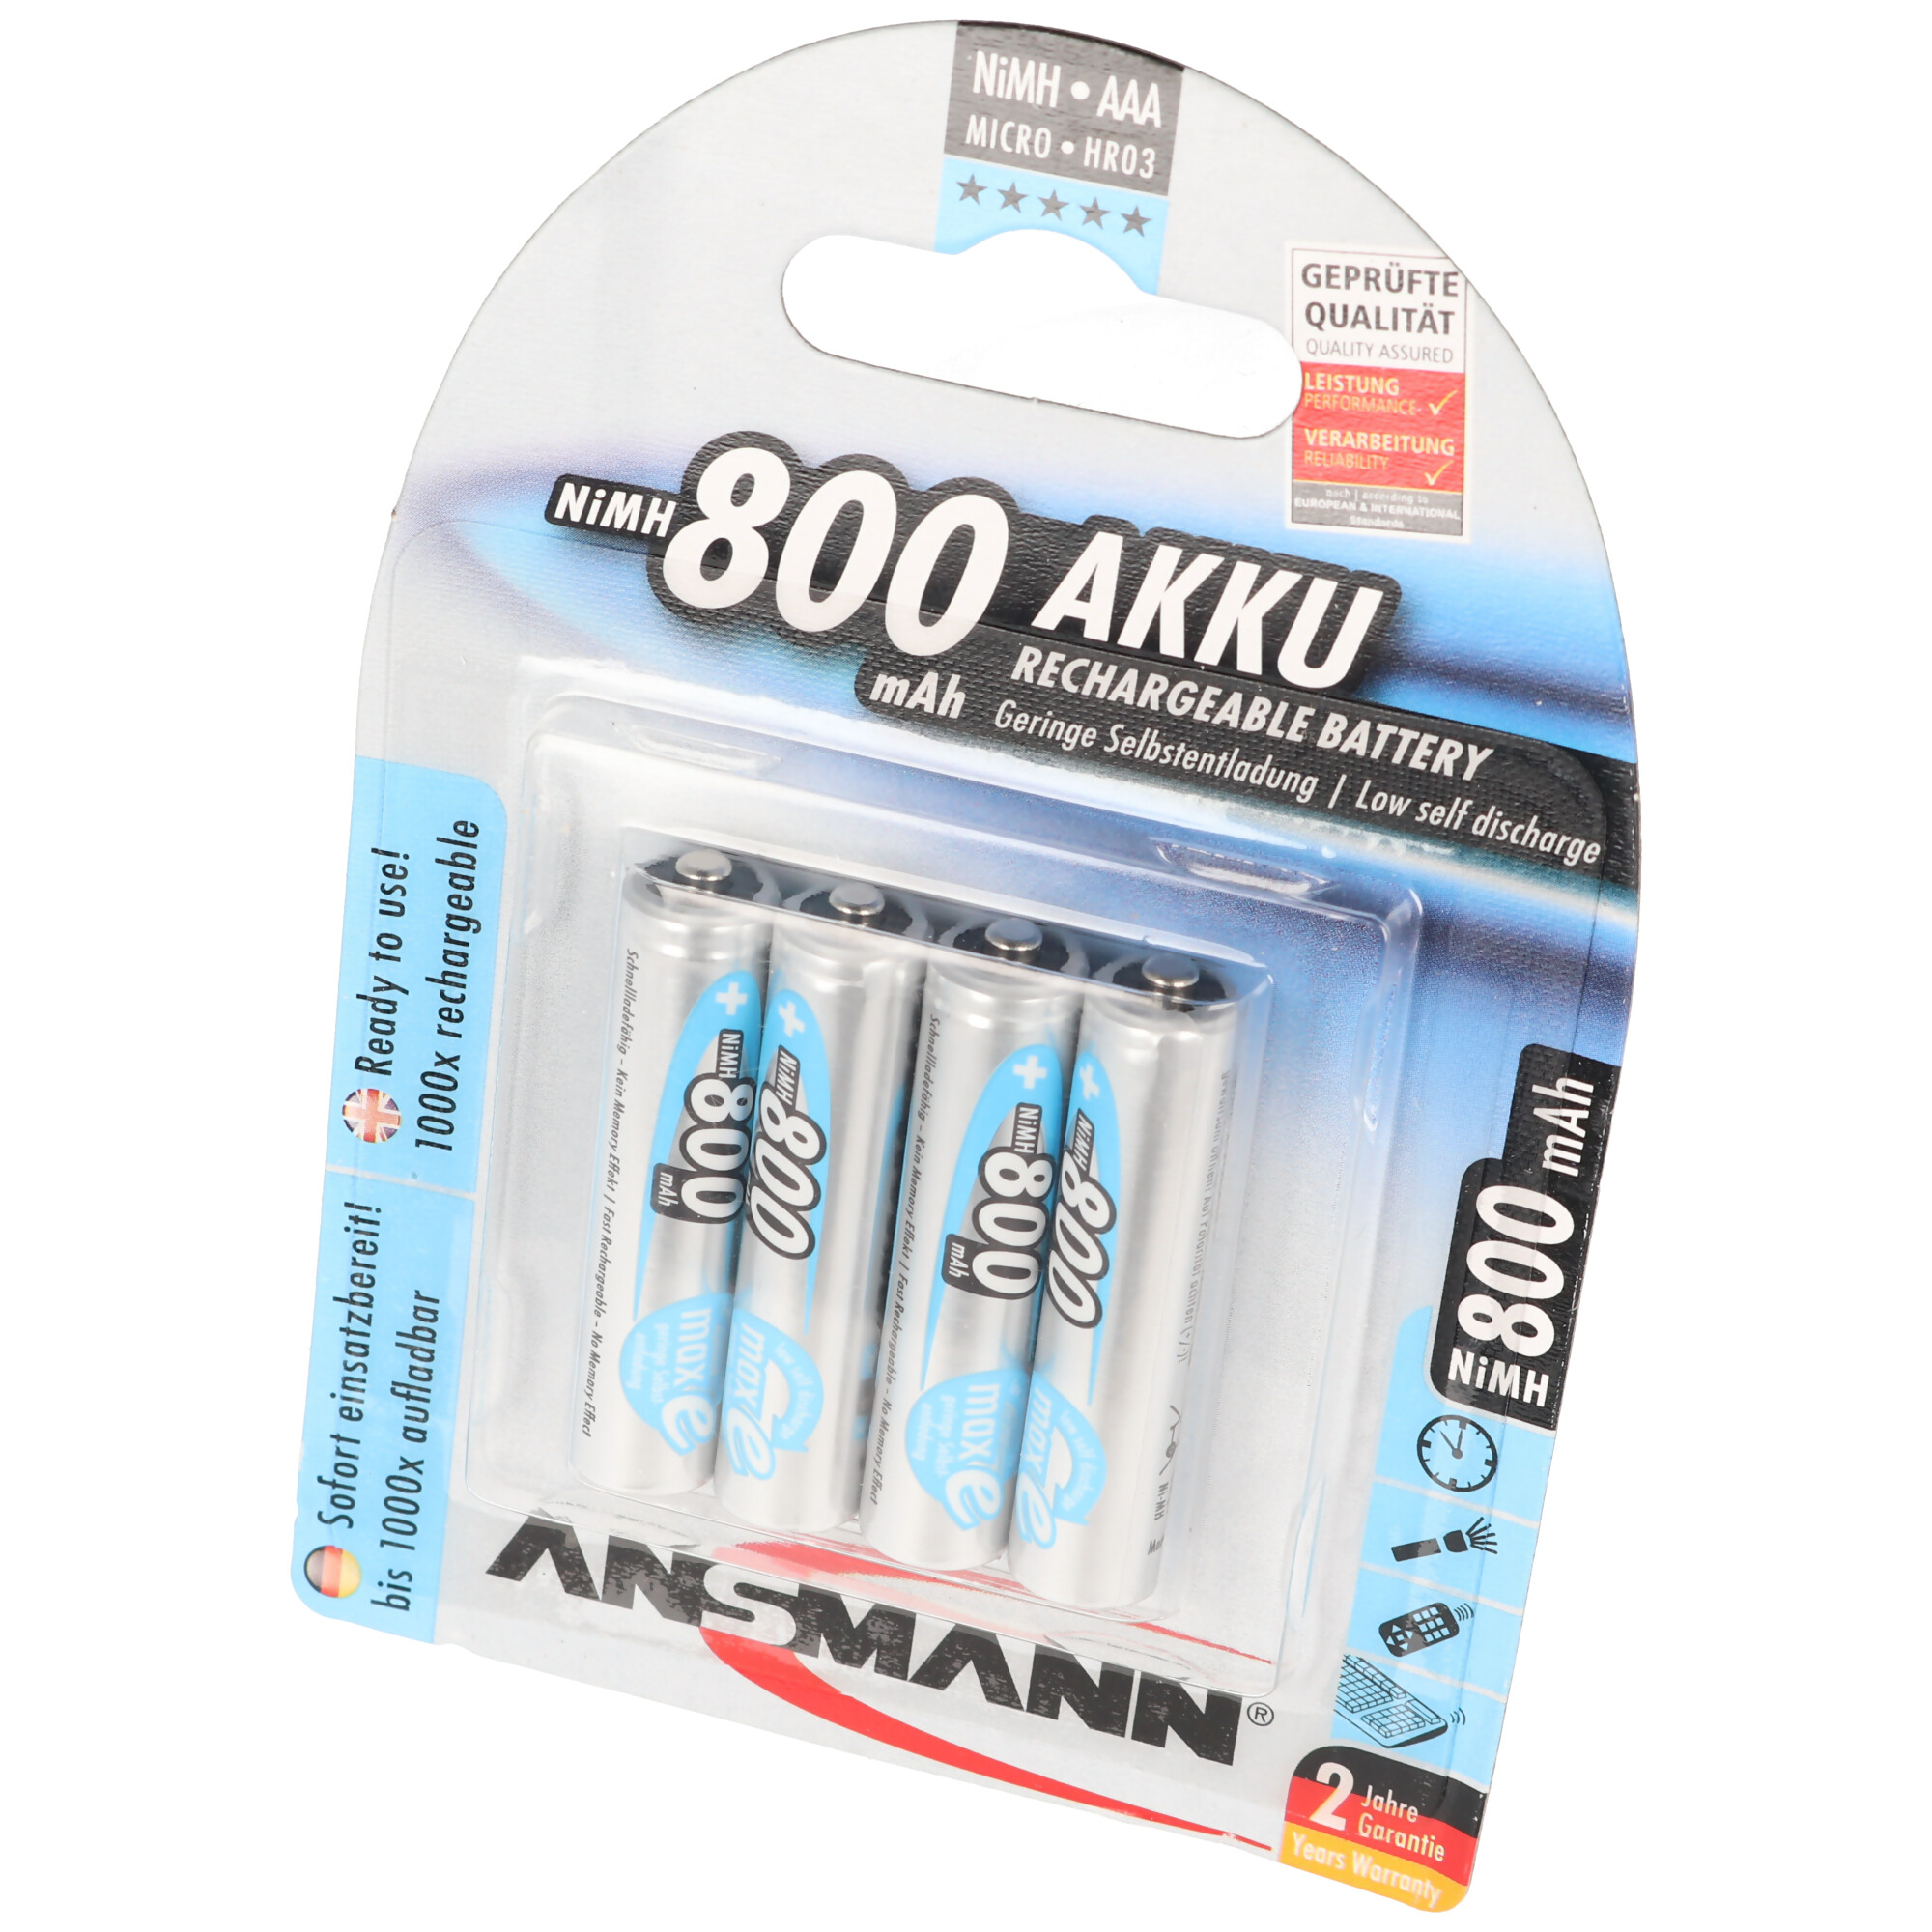 ANSMANN Ansmann maxE im NiMH Akku, Akku Blister Micro AAA 4er - Nickel-Metallhydrid mAh 800